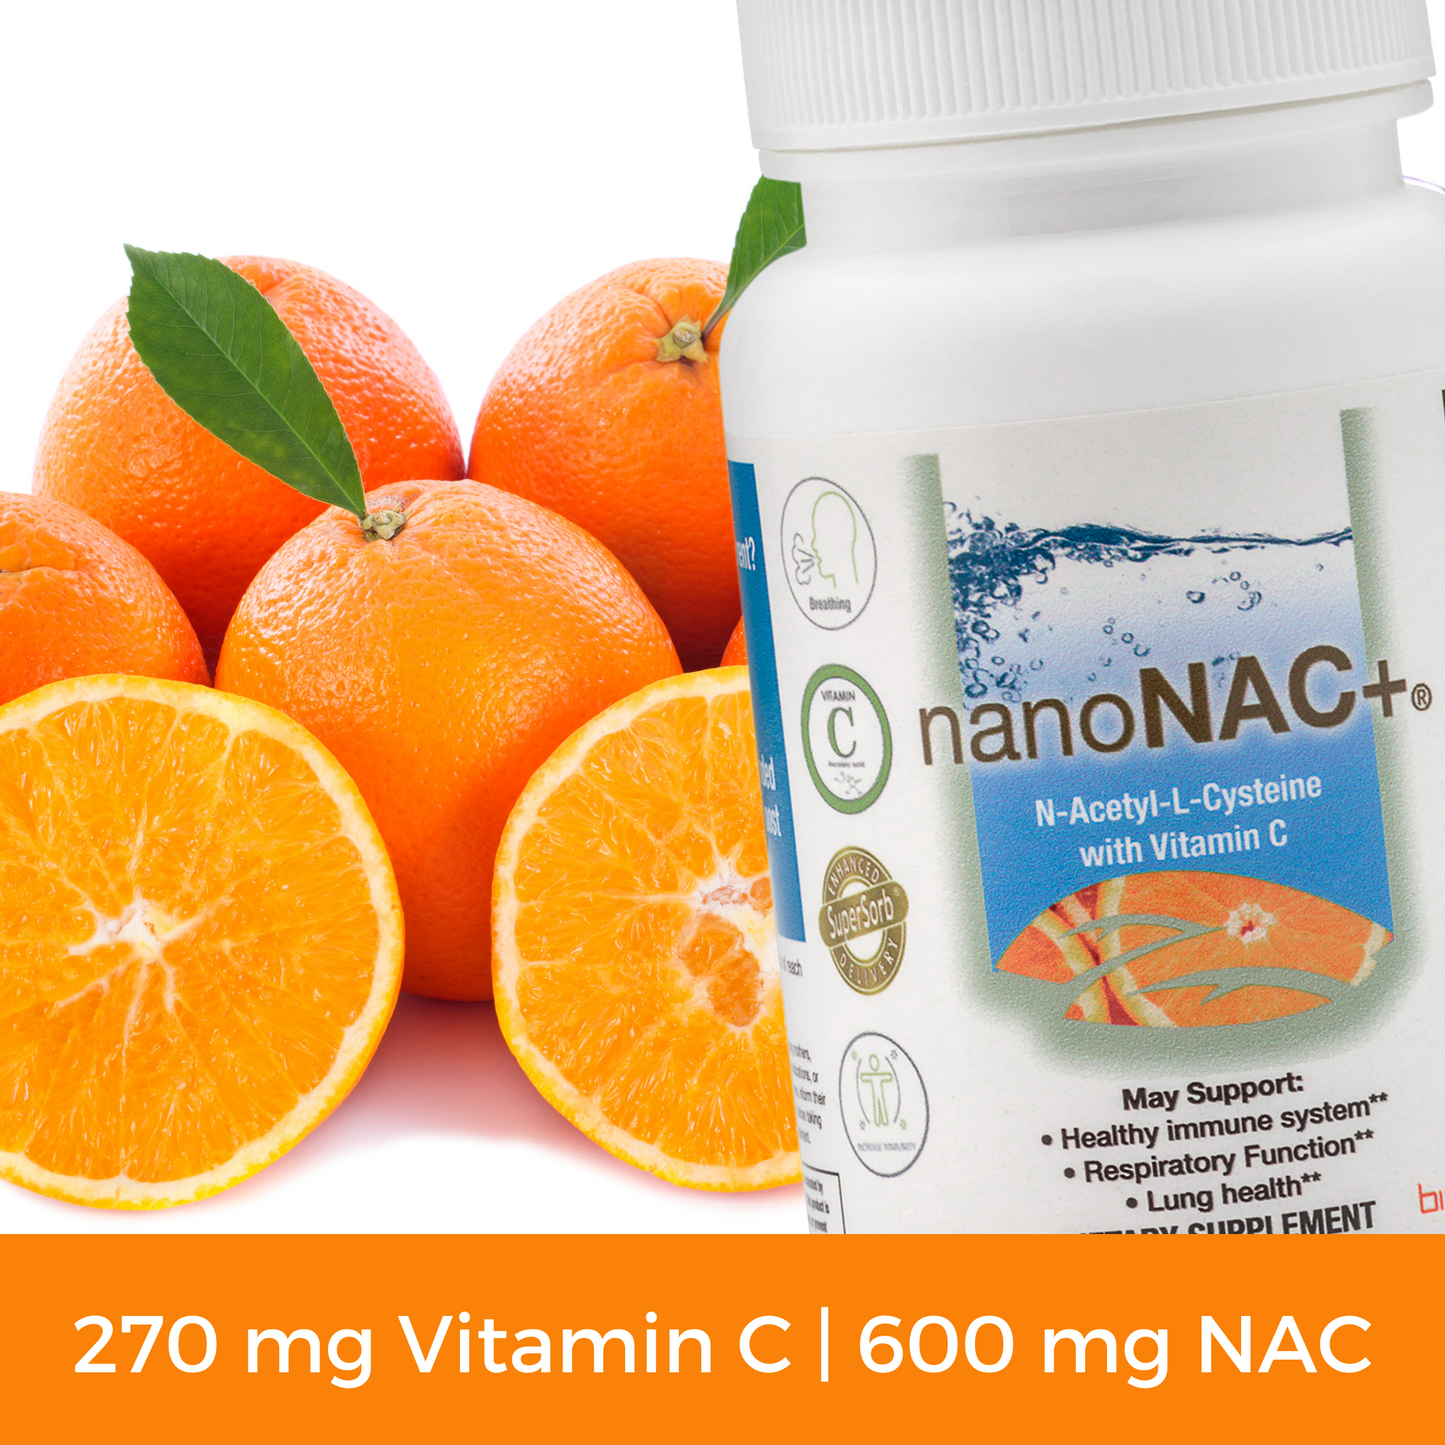 nanonac+ benefits